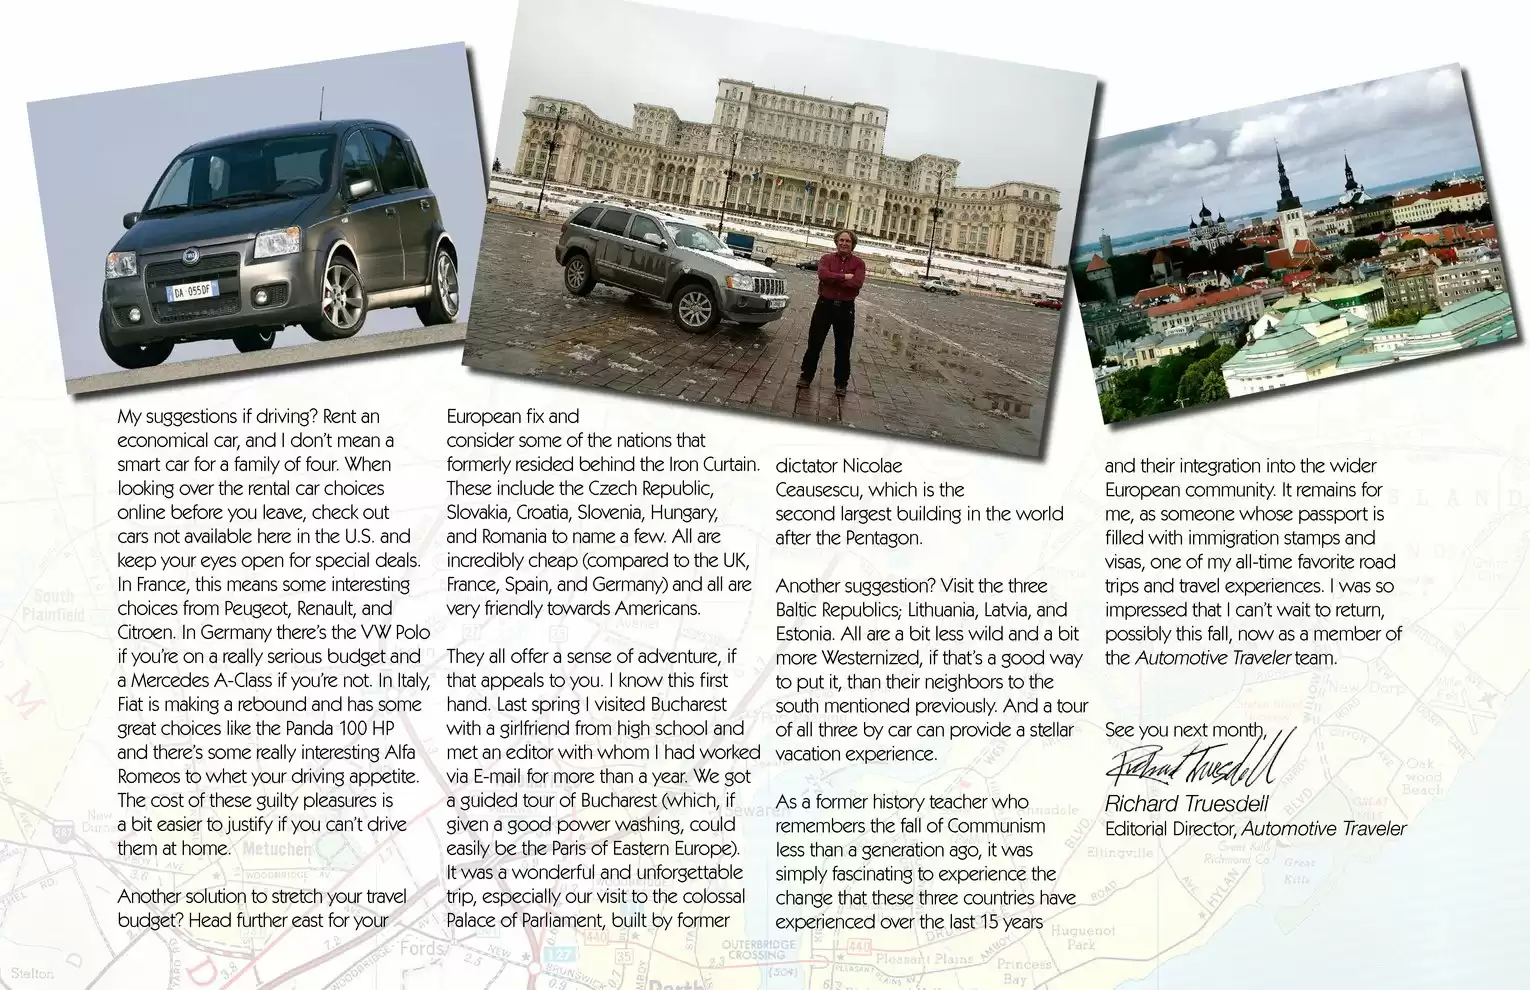 Automotive Traveler Magazine: Vol 1 Iss 3 Page 7